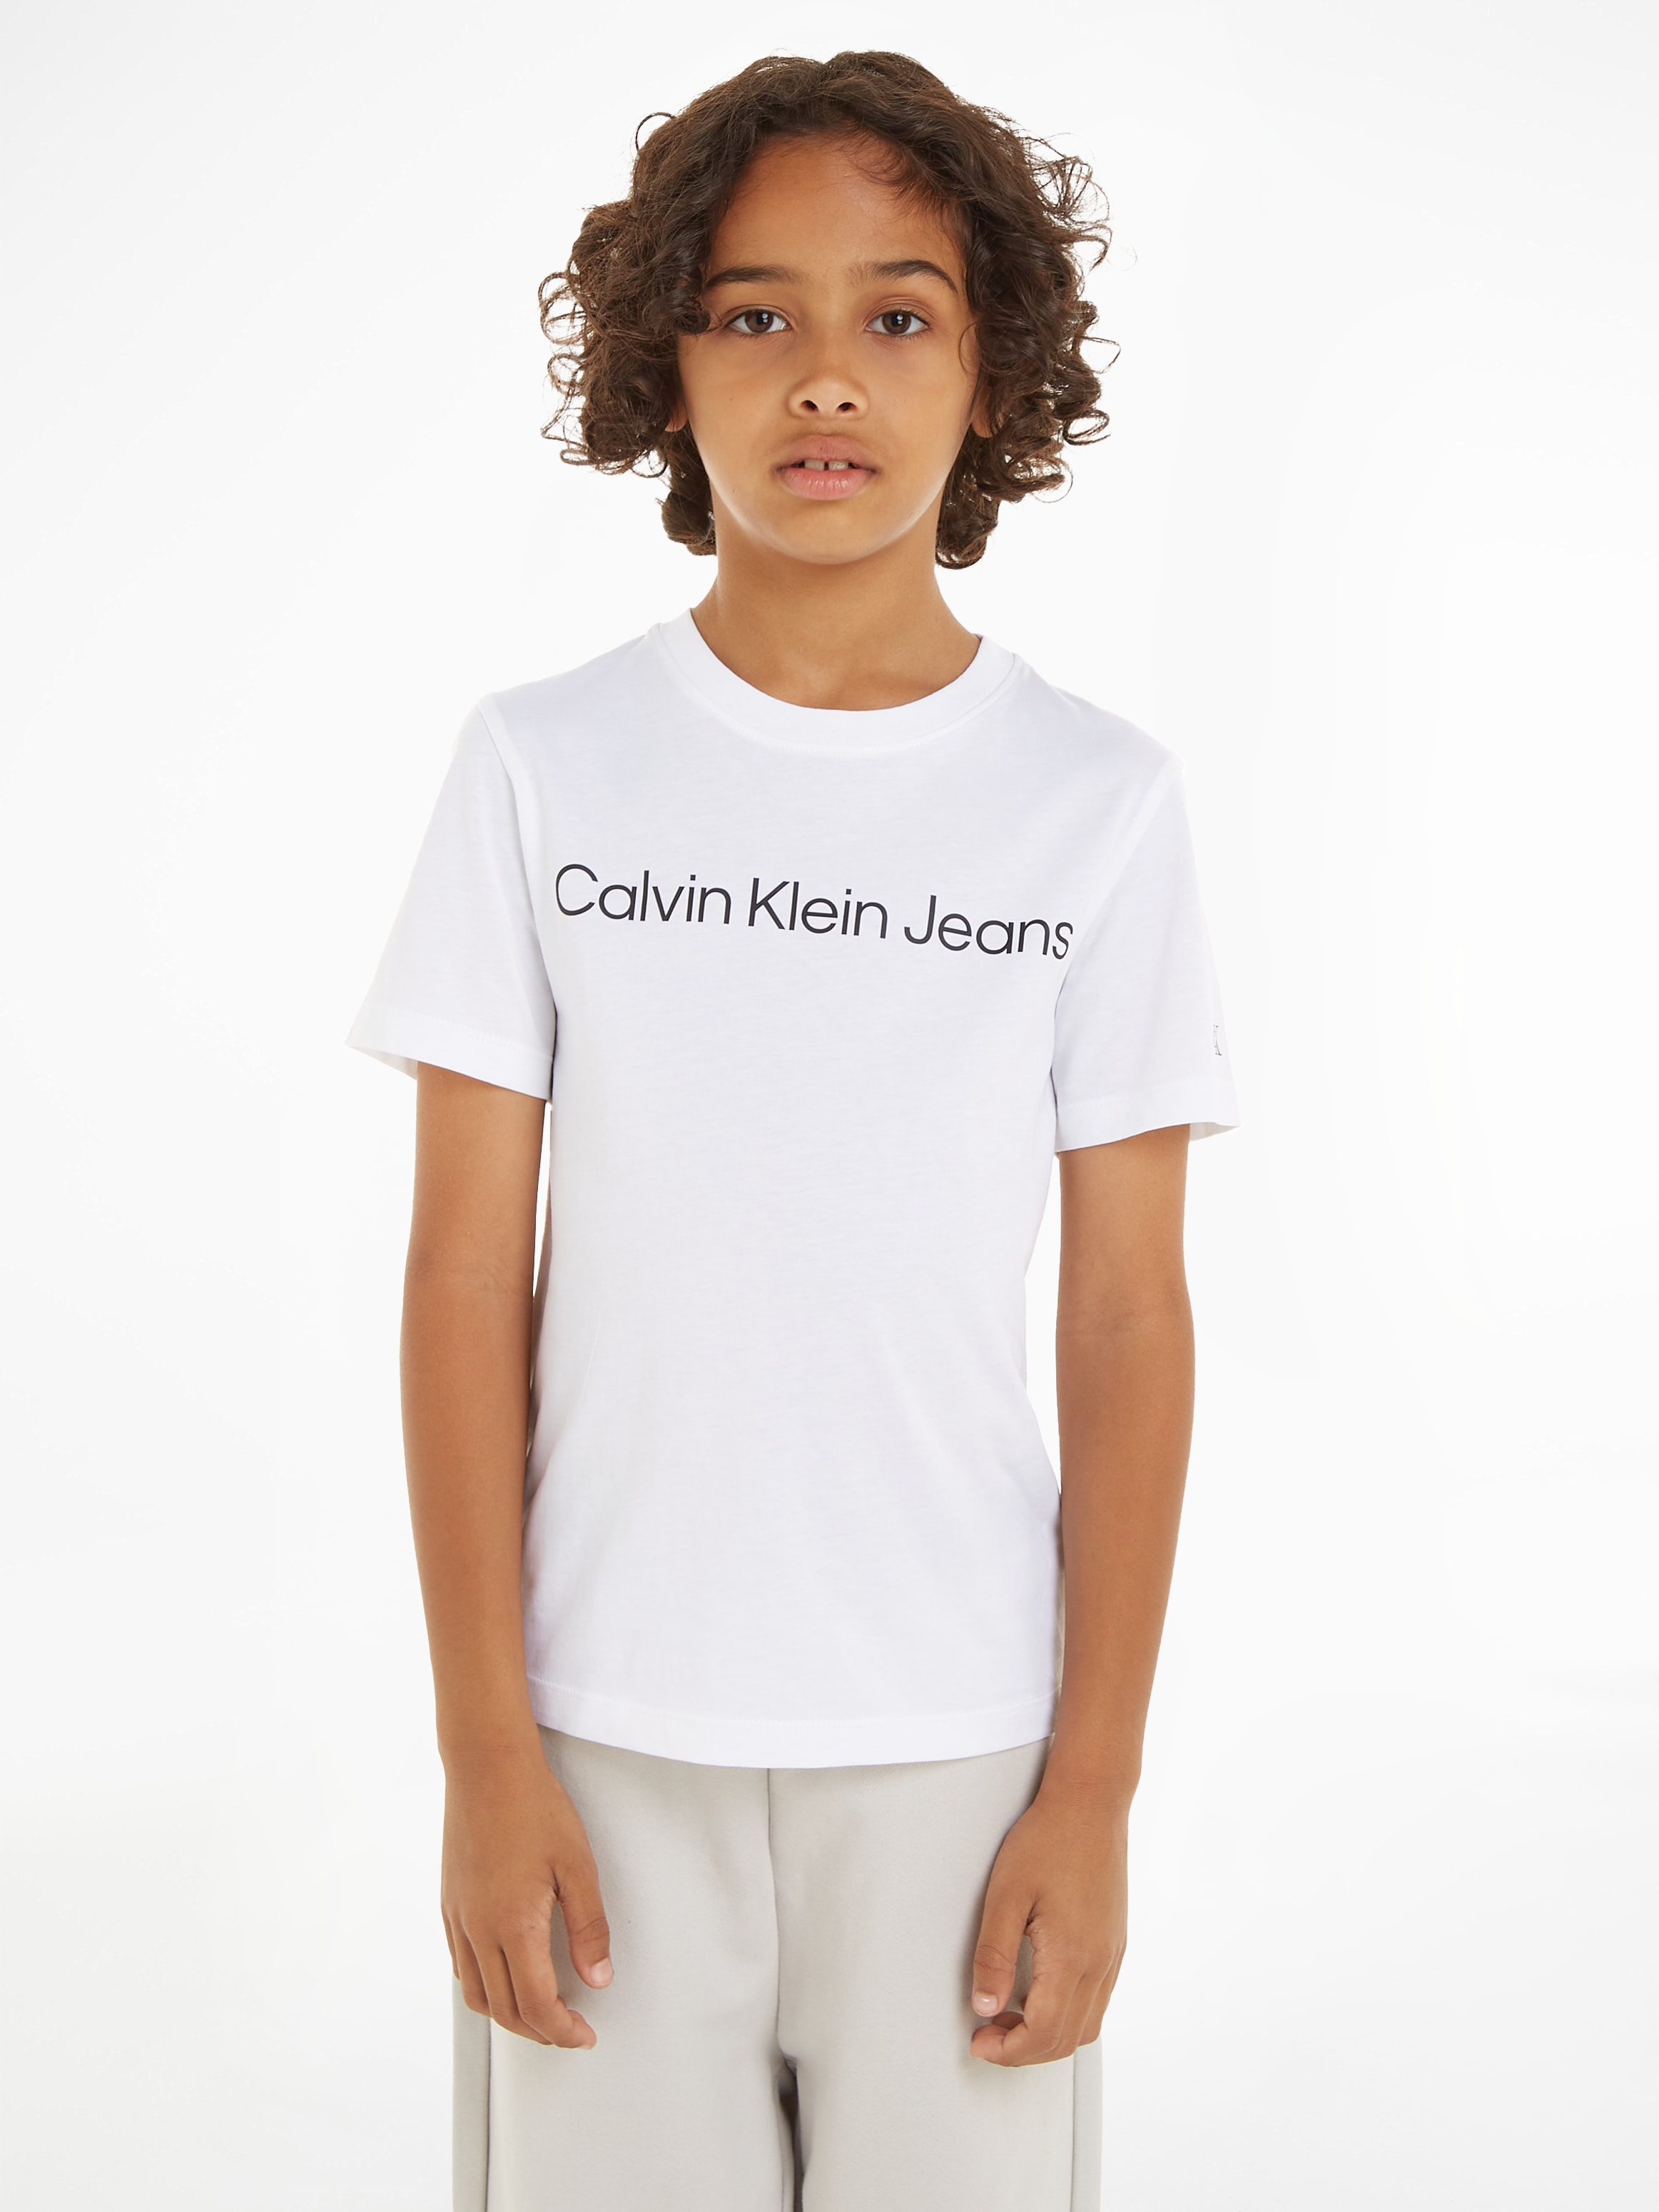 Black Friday »INST. Calvin SS Logoschriftzug | T-SHIRT«, BAUR Klein Jeans LOGO mit Sweatshirt